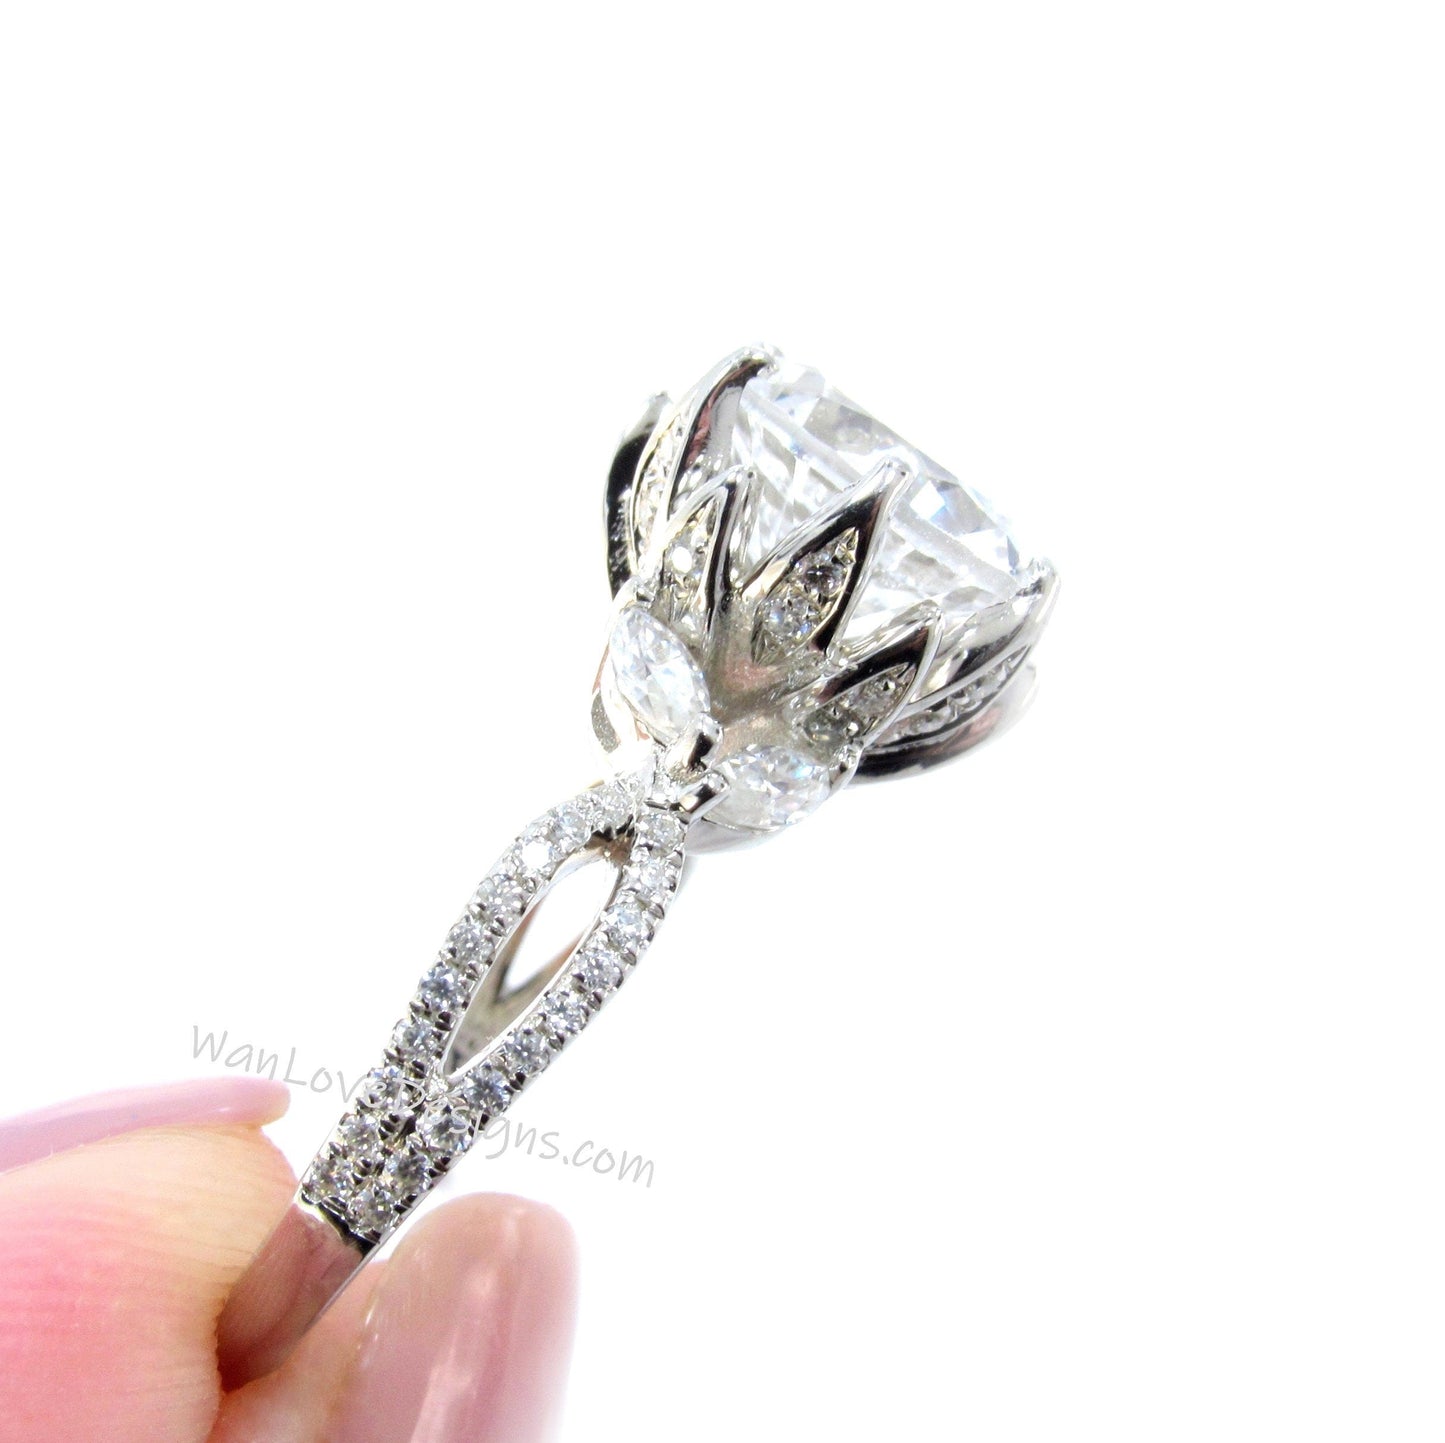 Ruby & Diamond Ring-Lotus Flower Engagement Ring-Marquise Gems-Split Shank Leaf Ring Custom-Weding-Anniversary Gift-Push Gift Wan Love Designs